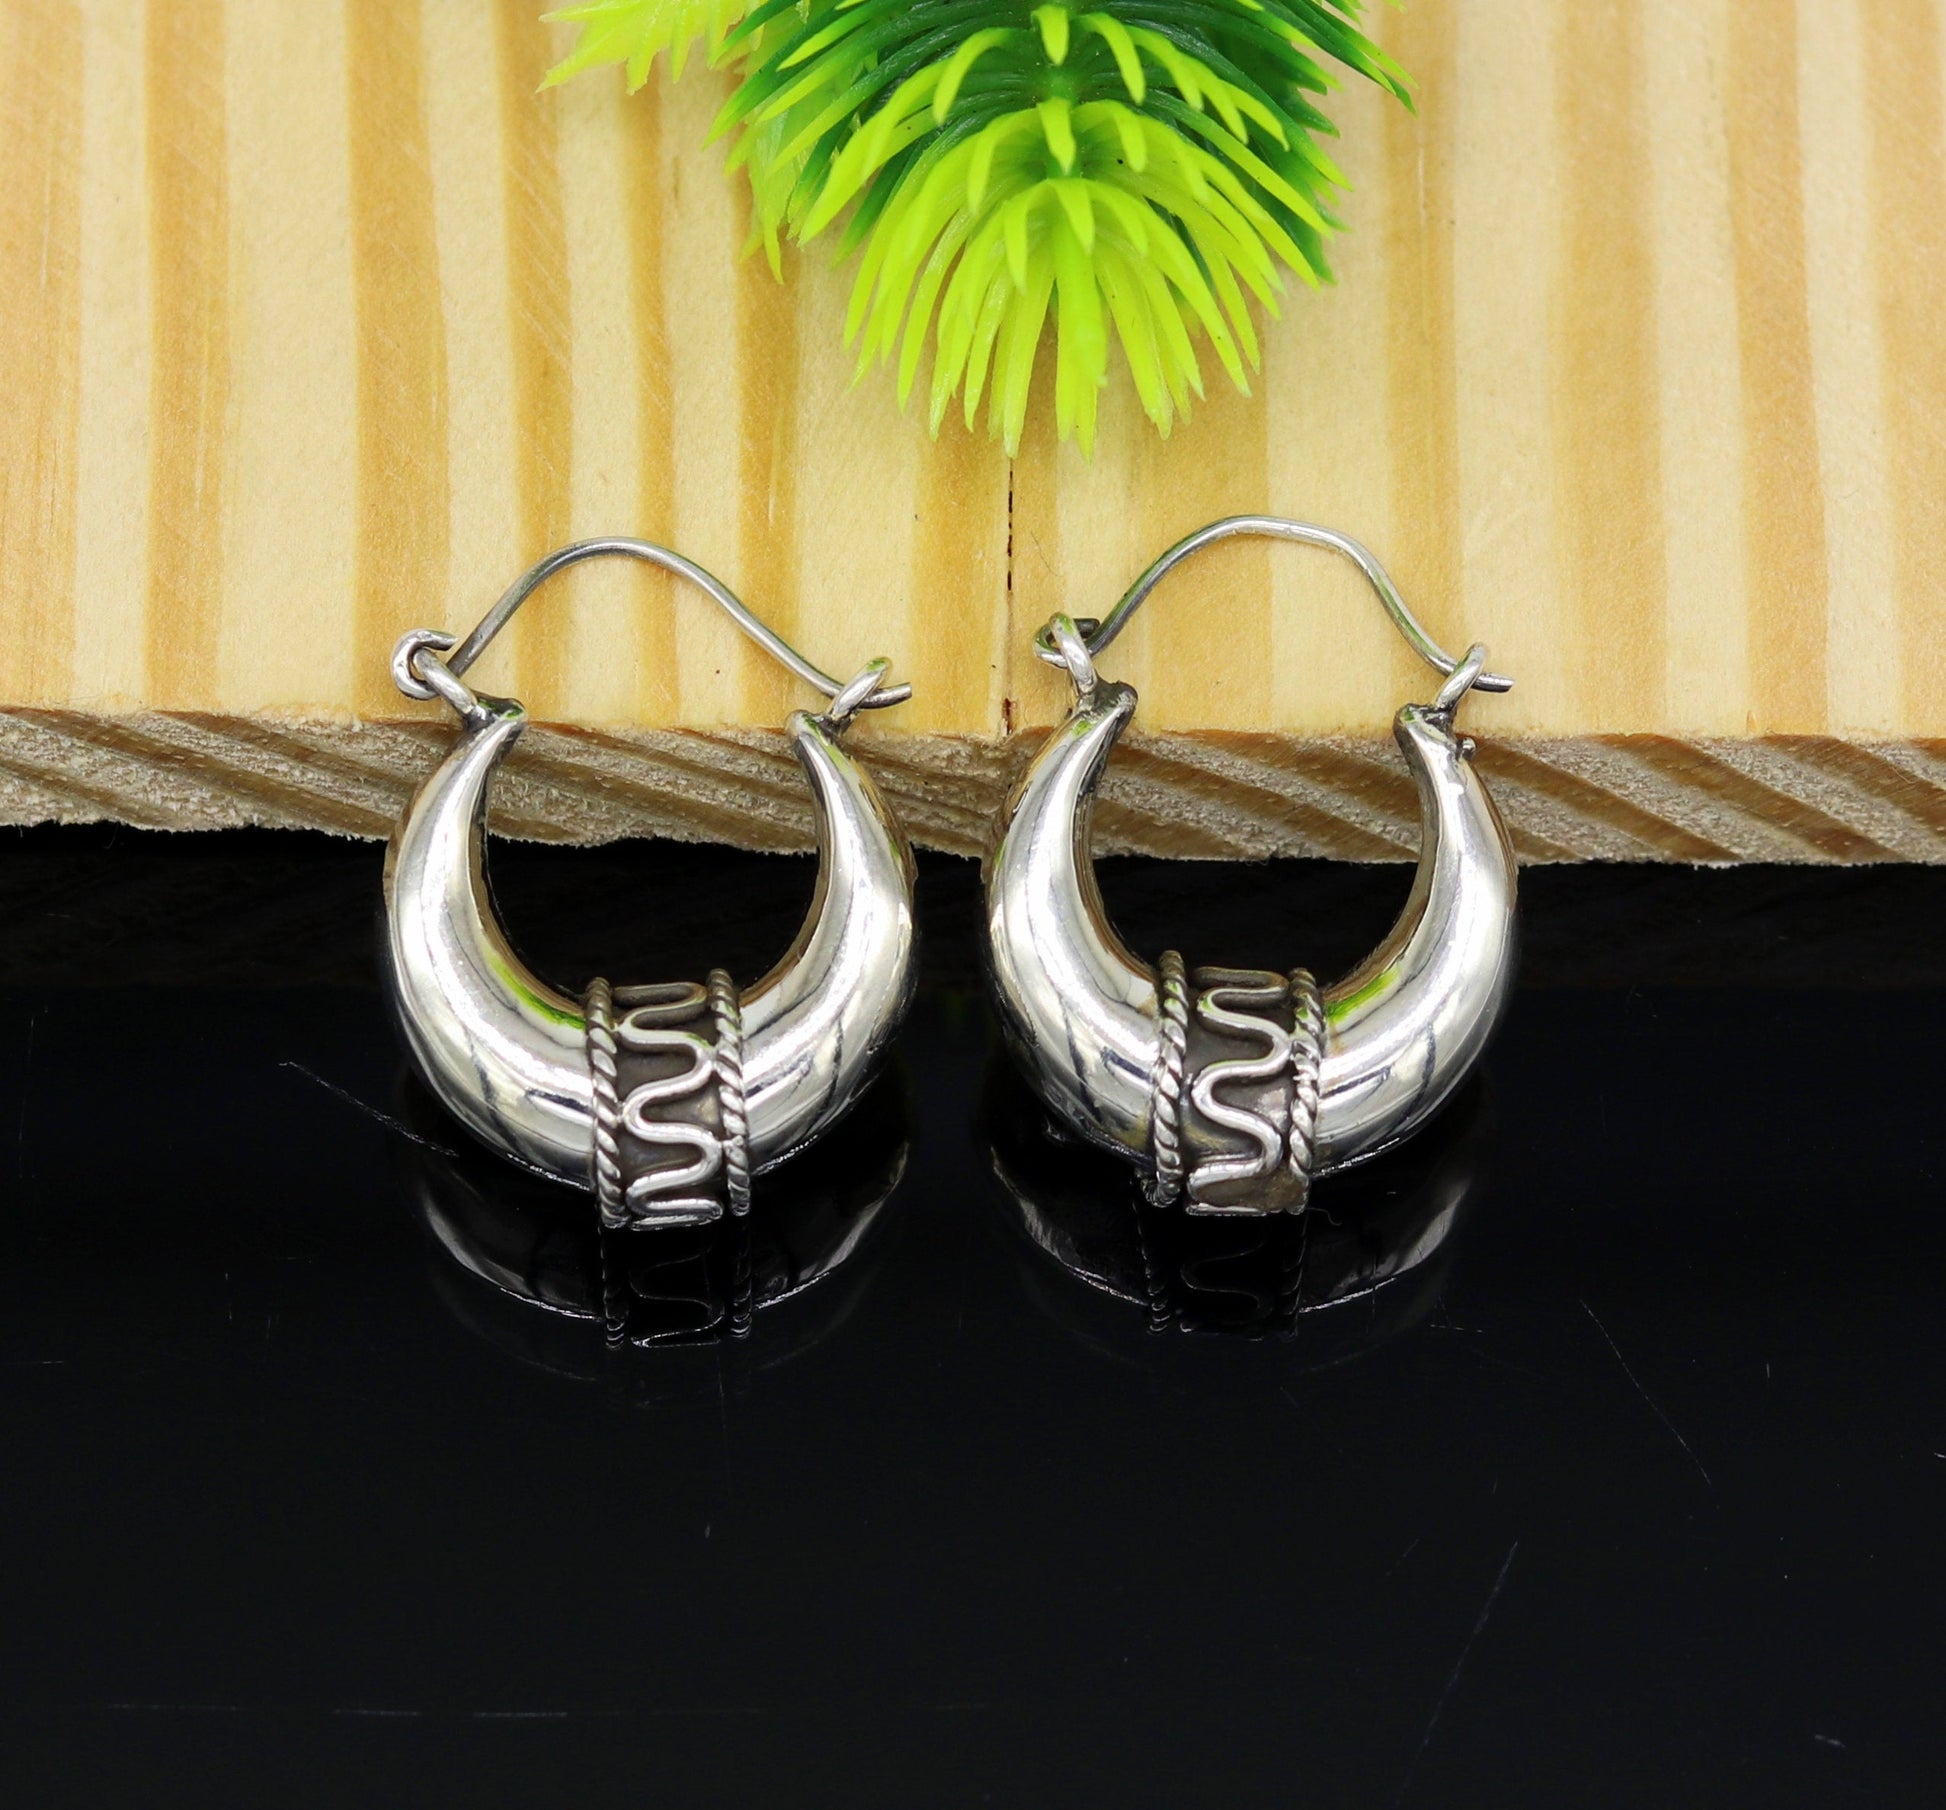 925 sterling silver handmade vintage antique design hoops earring bali, elegant customized earring gift tribal ethnic jewelry ske9 - TRIBAL ORNAMENTS